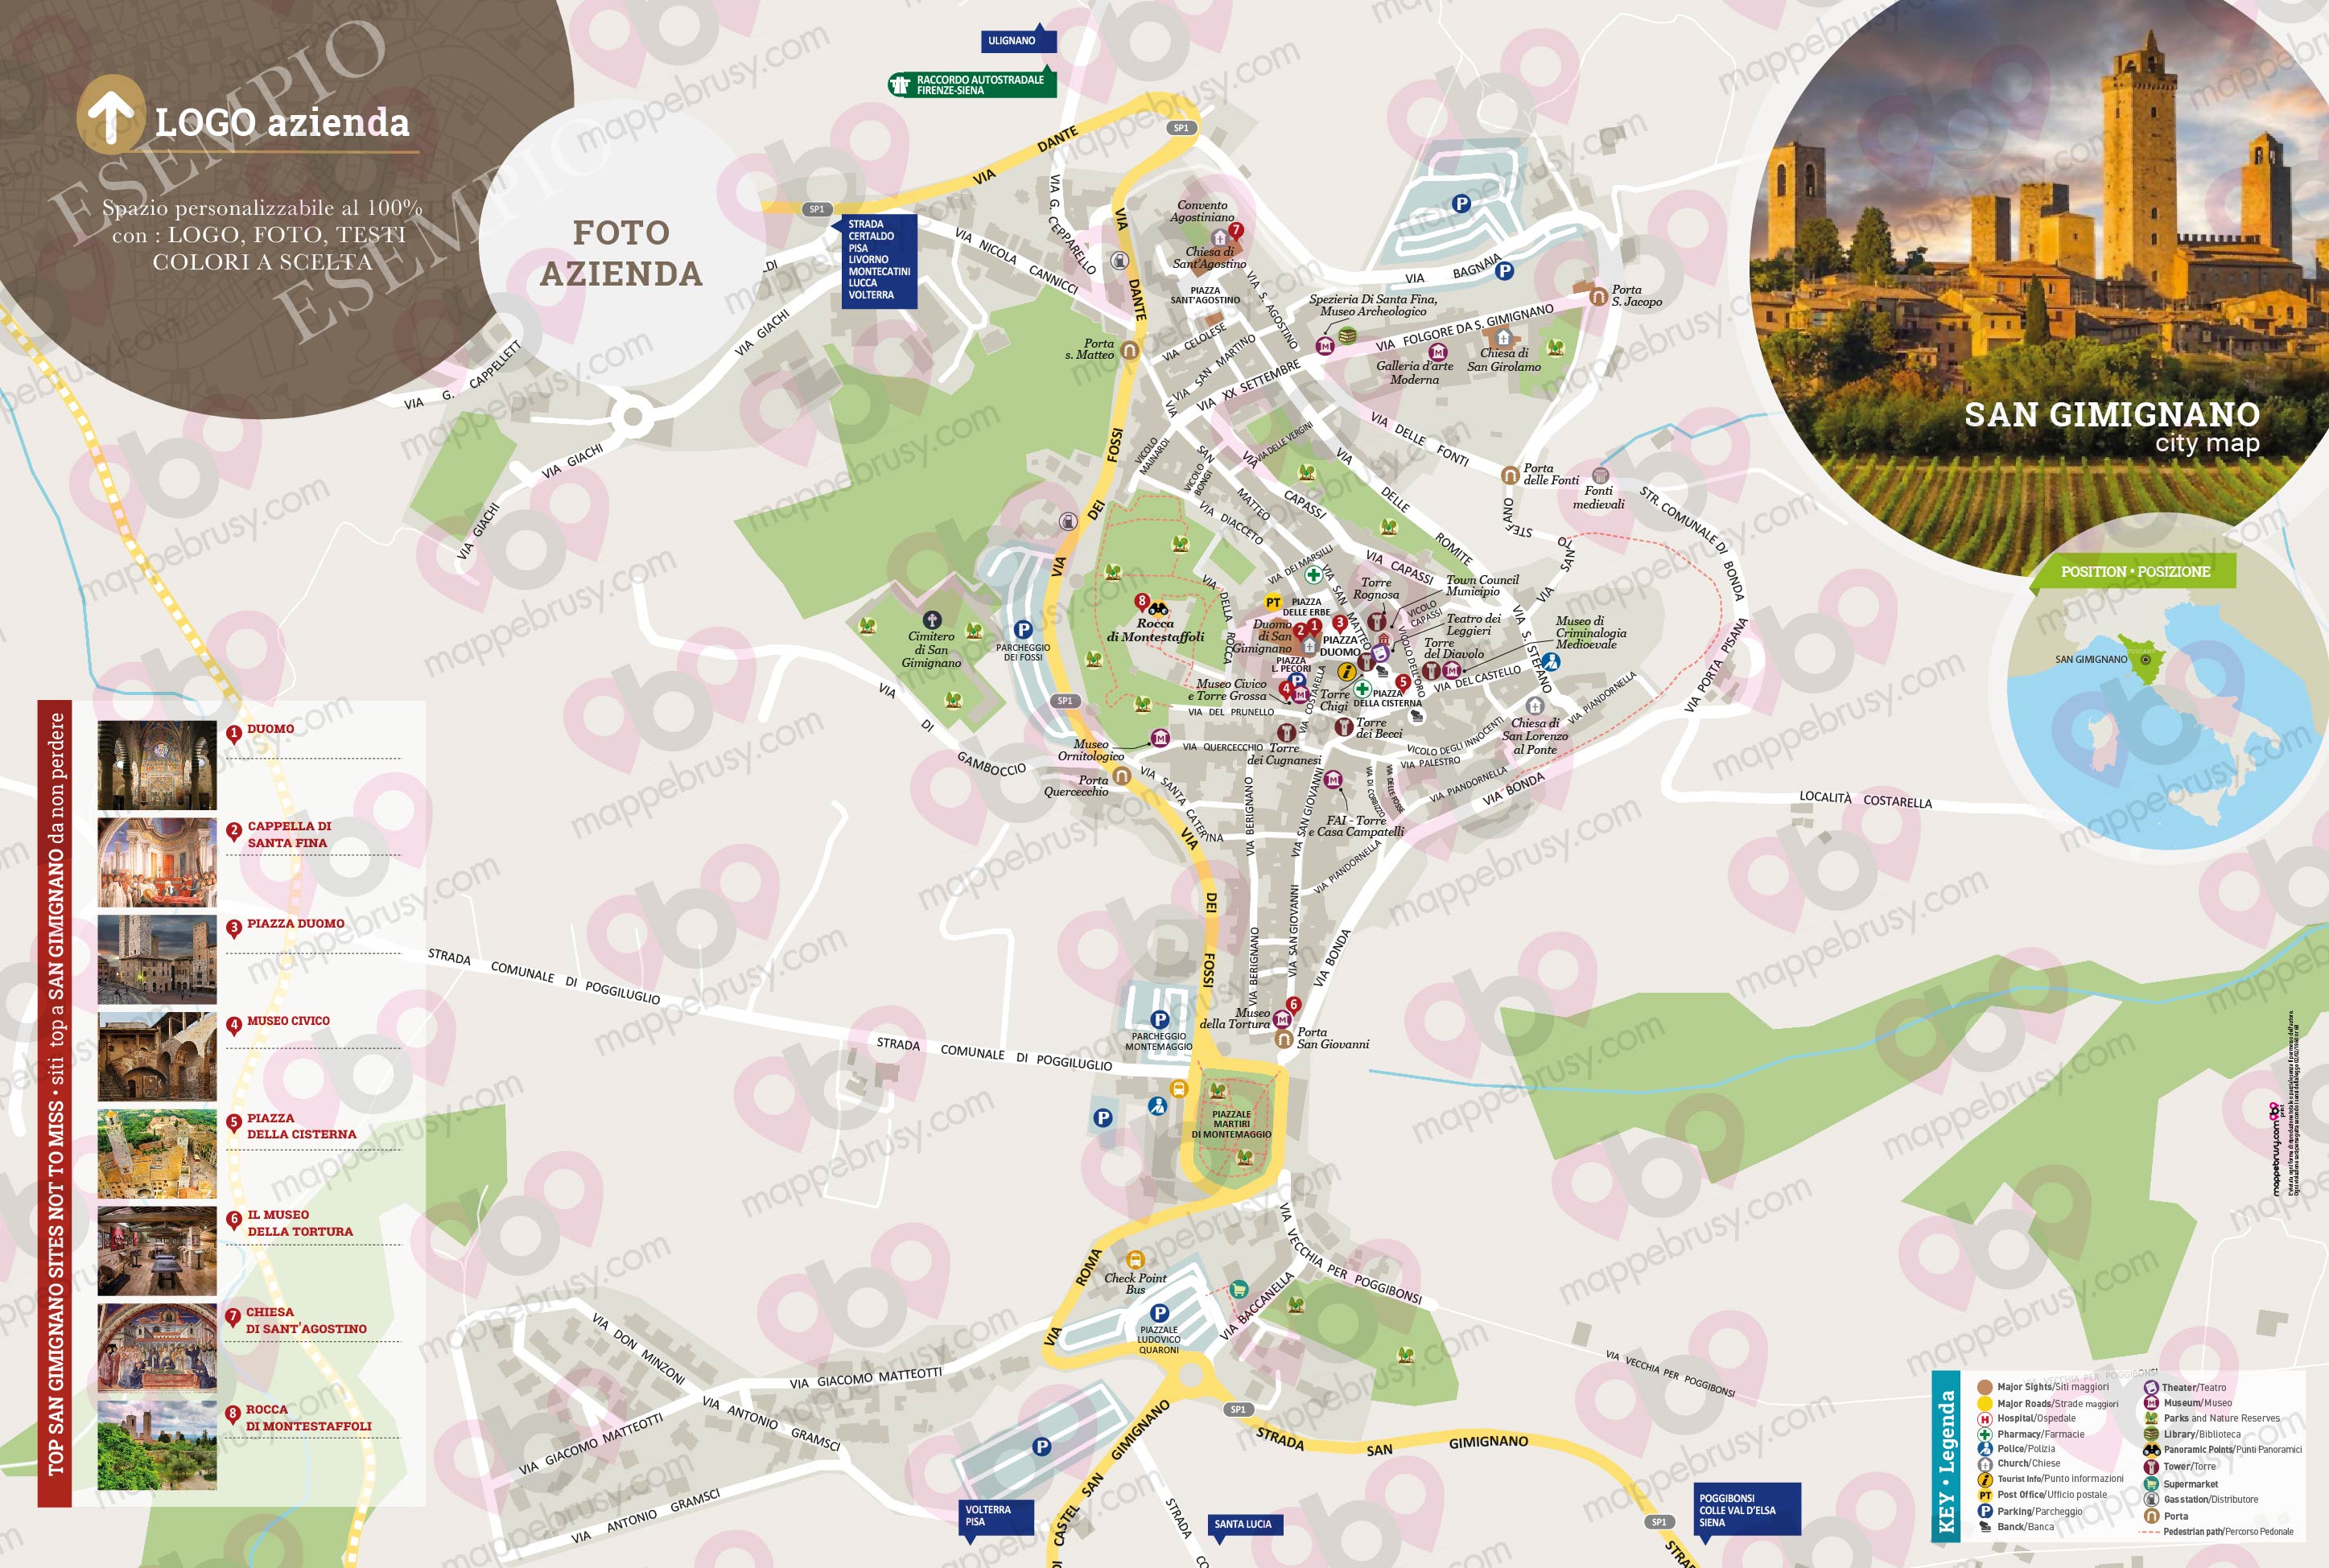 Mappa di San Gimignano - San Gimignano city map - mappa San Gimignano - mappa personalizzata di San Gimignano - mappa tursitica di San Gimignano